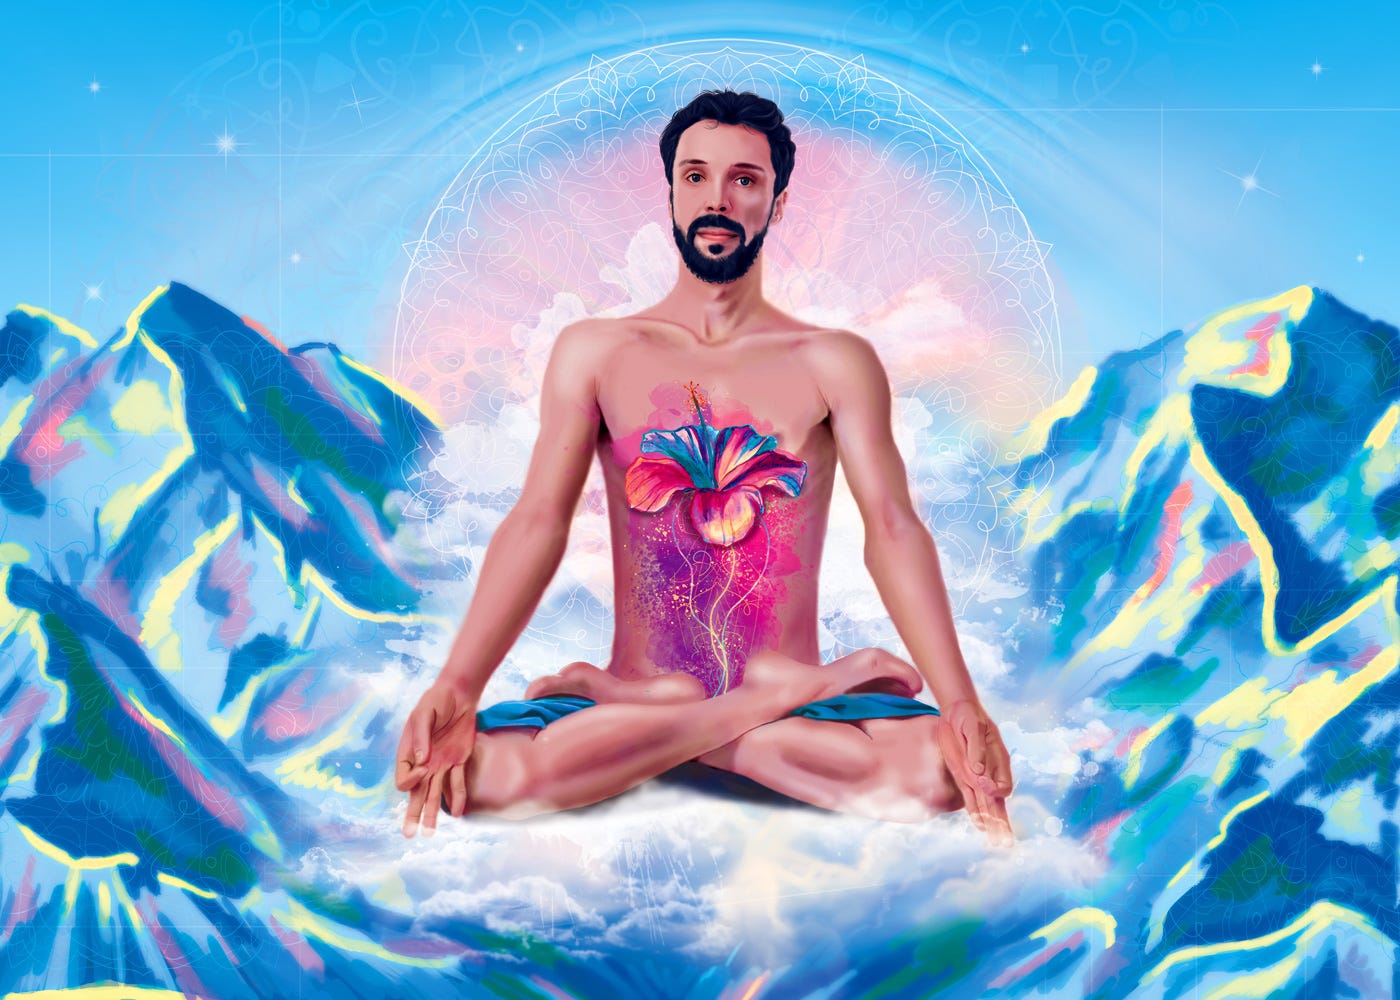 [Source](https://www.behance.net/gallery/41825919/Powerful-Yogi-Meditating-Men)